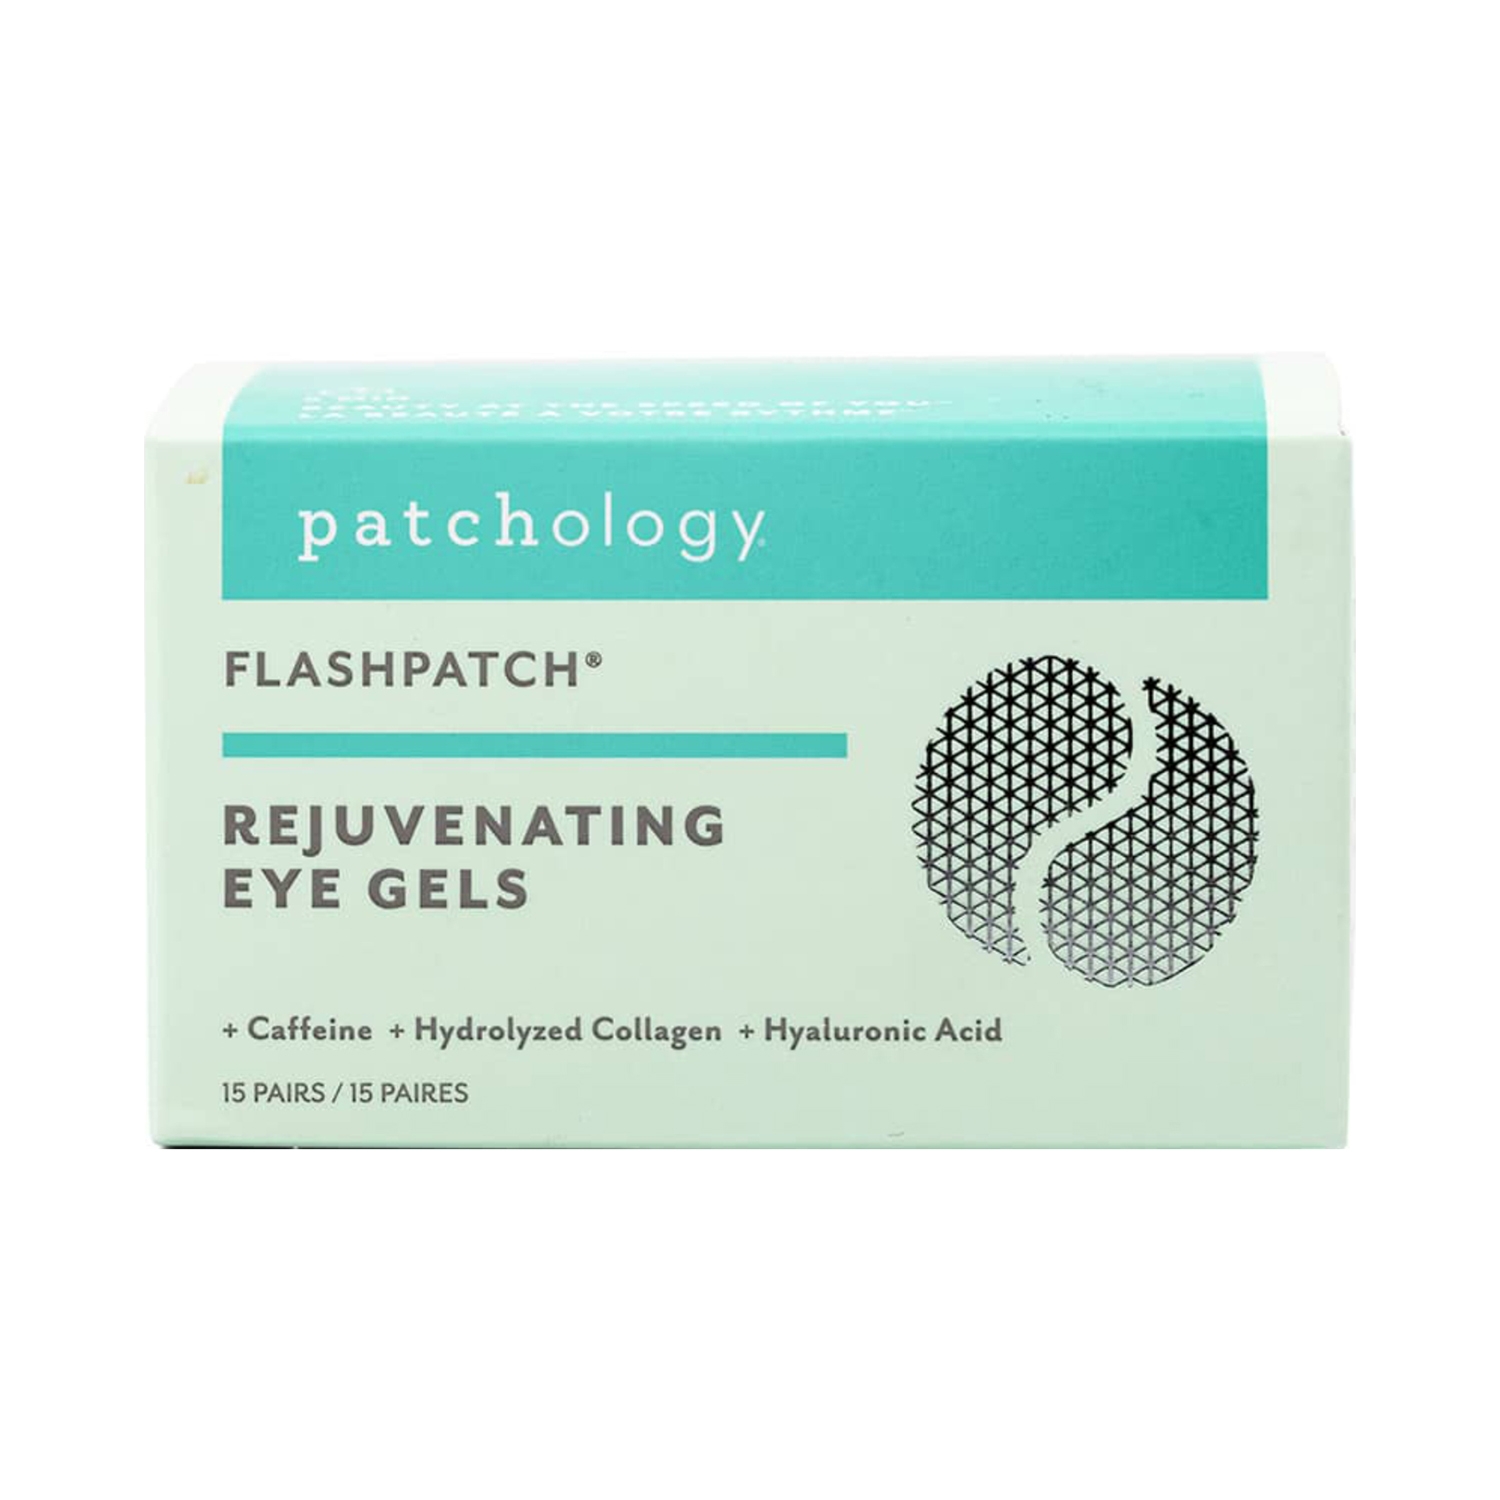 Patchology Flashpatch Rejuvenating Eye Gel Patches (15Pcs)